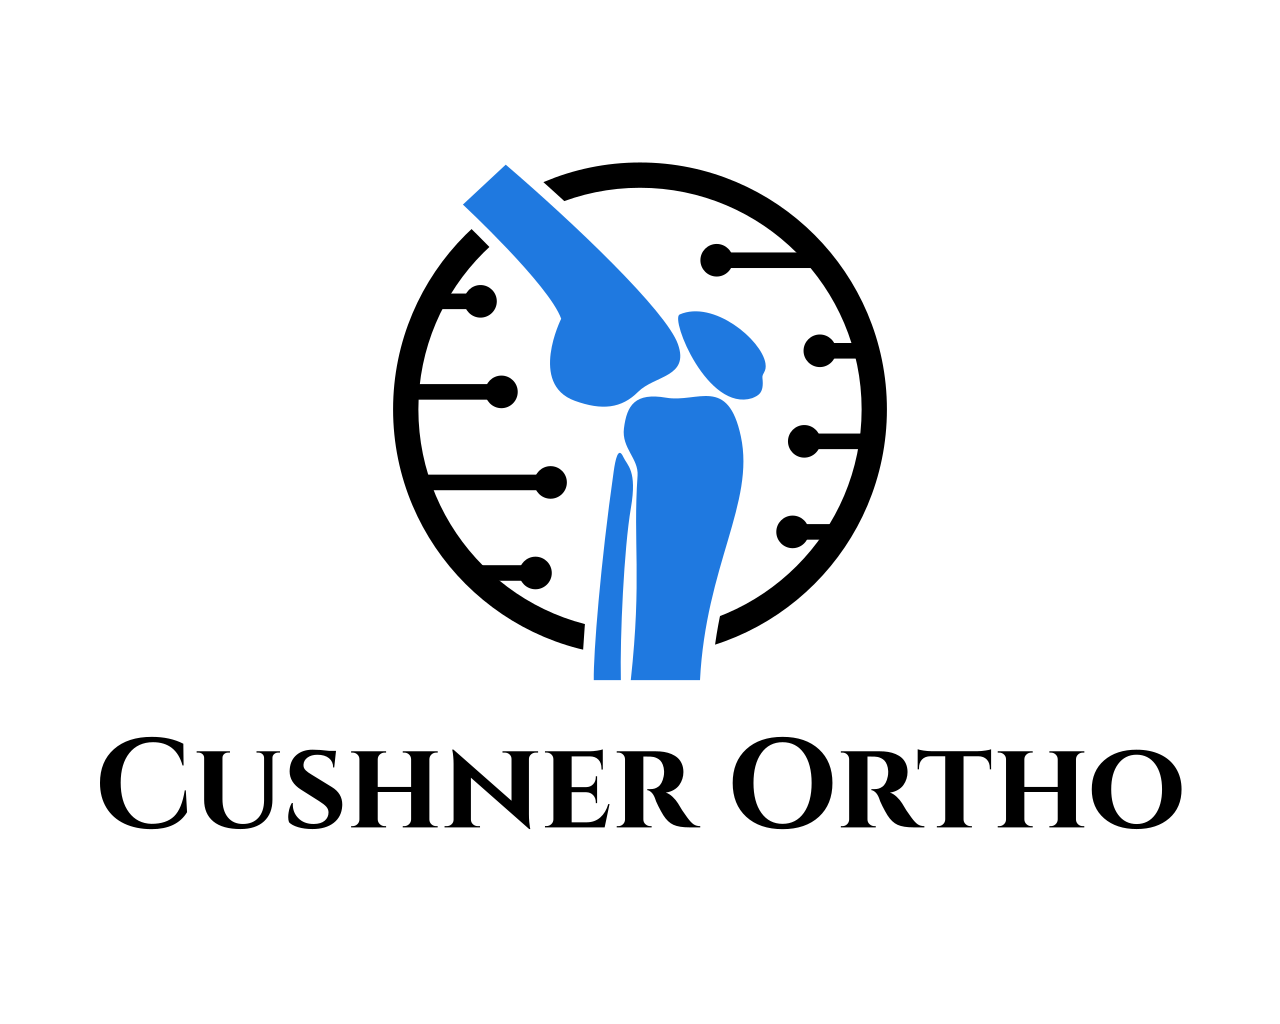 Cushner Ortho